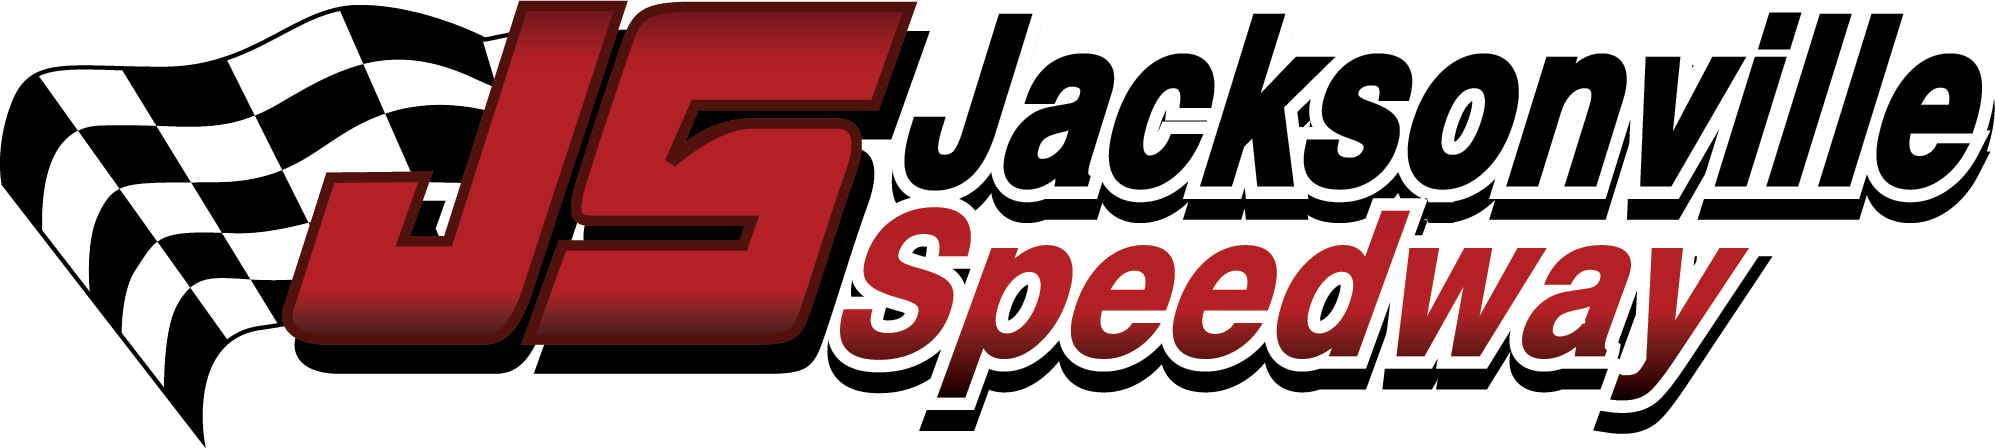 Jacksonville Speedway Logo